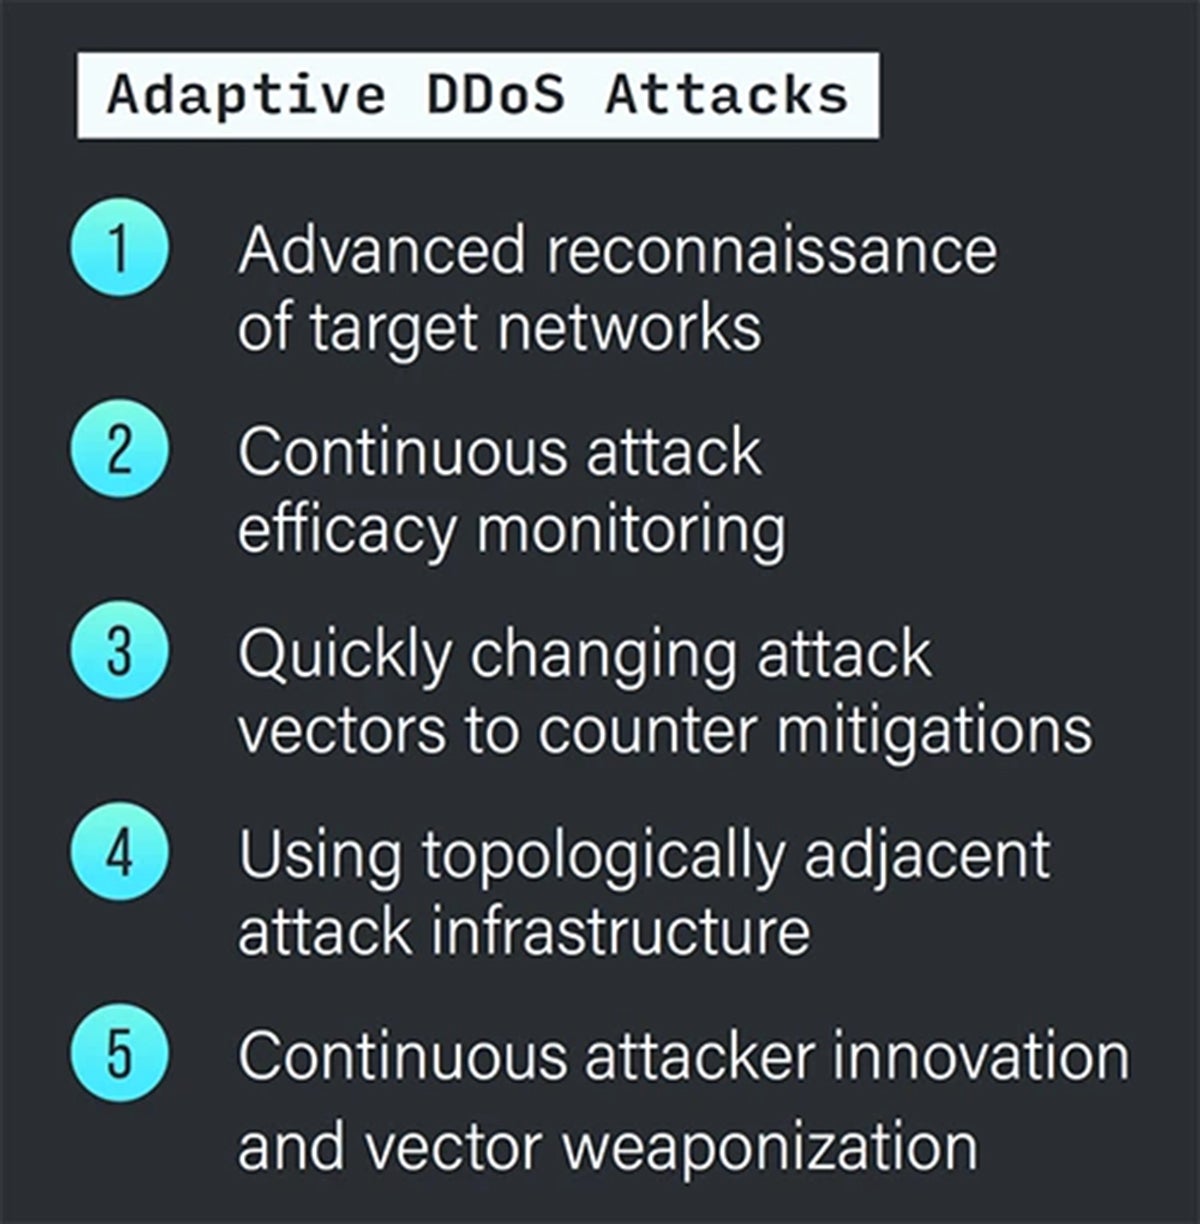 threat report adaptive ddos attacks blog figure 1200px